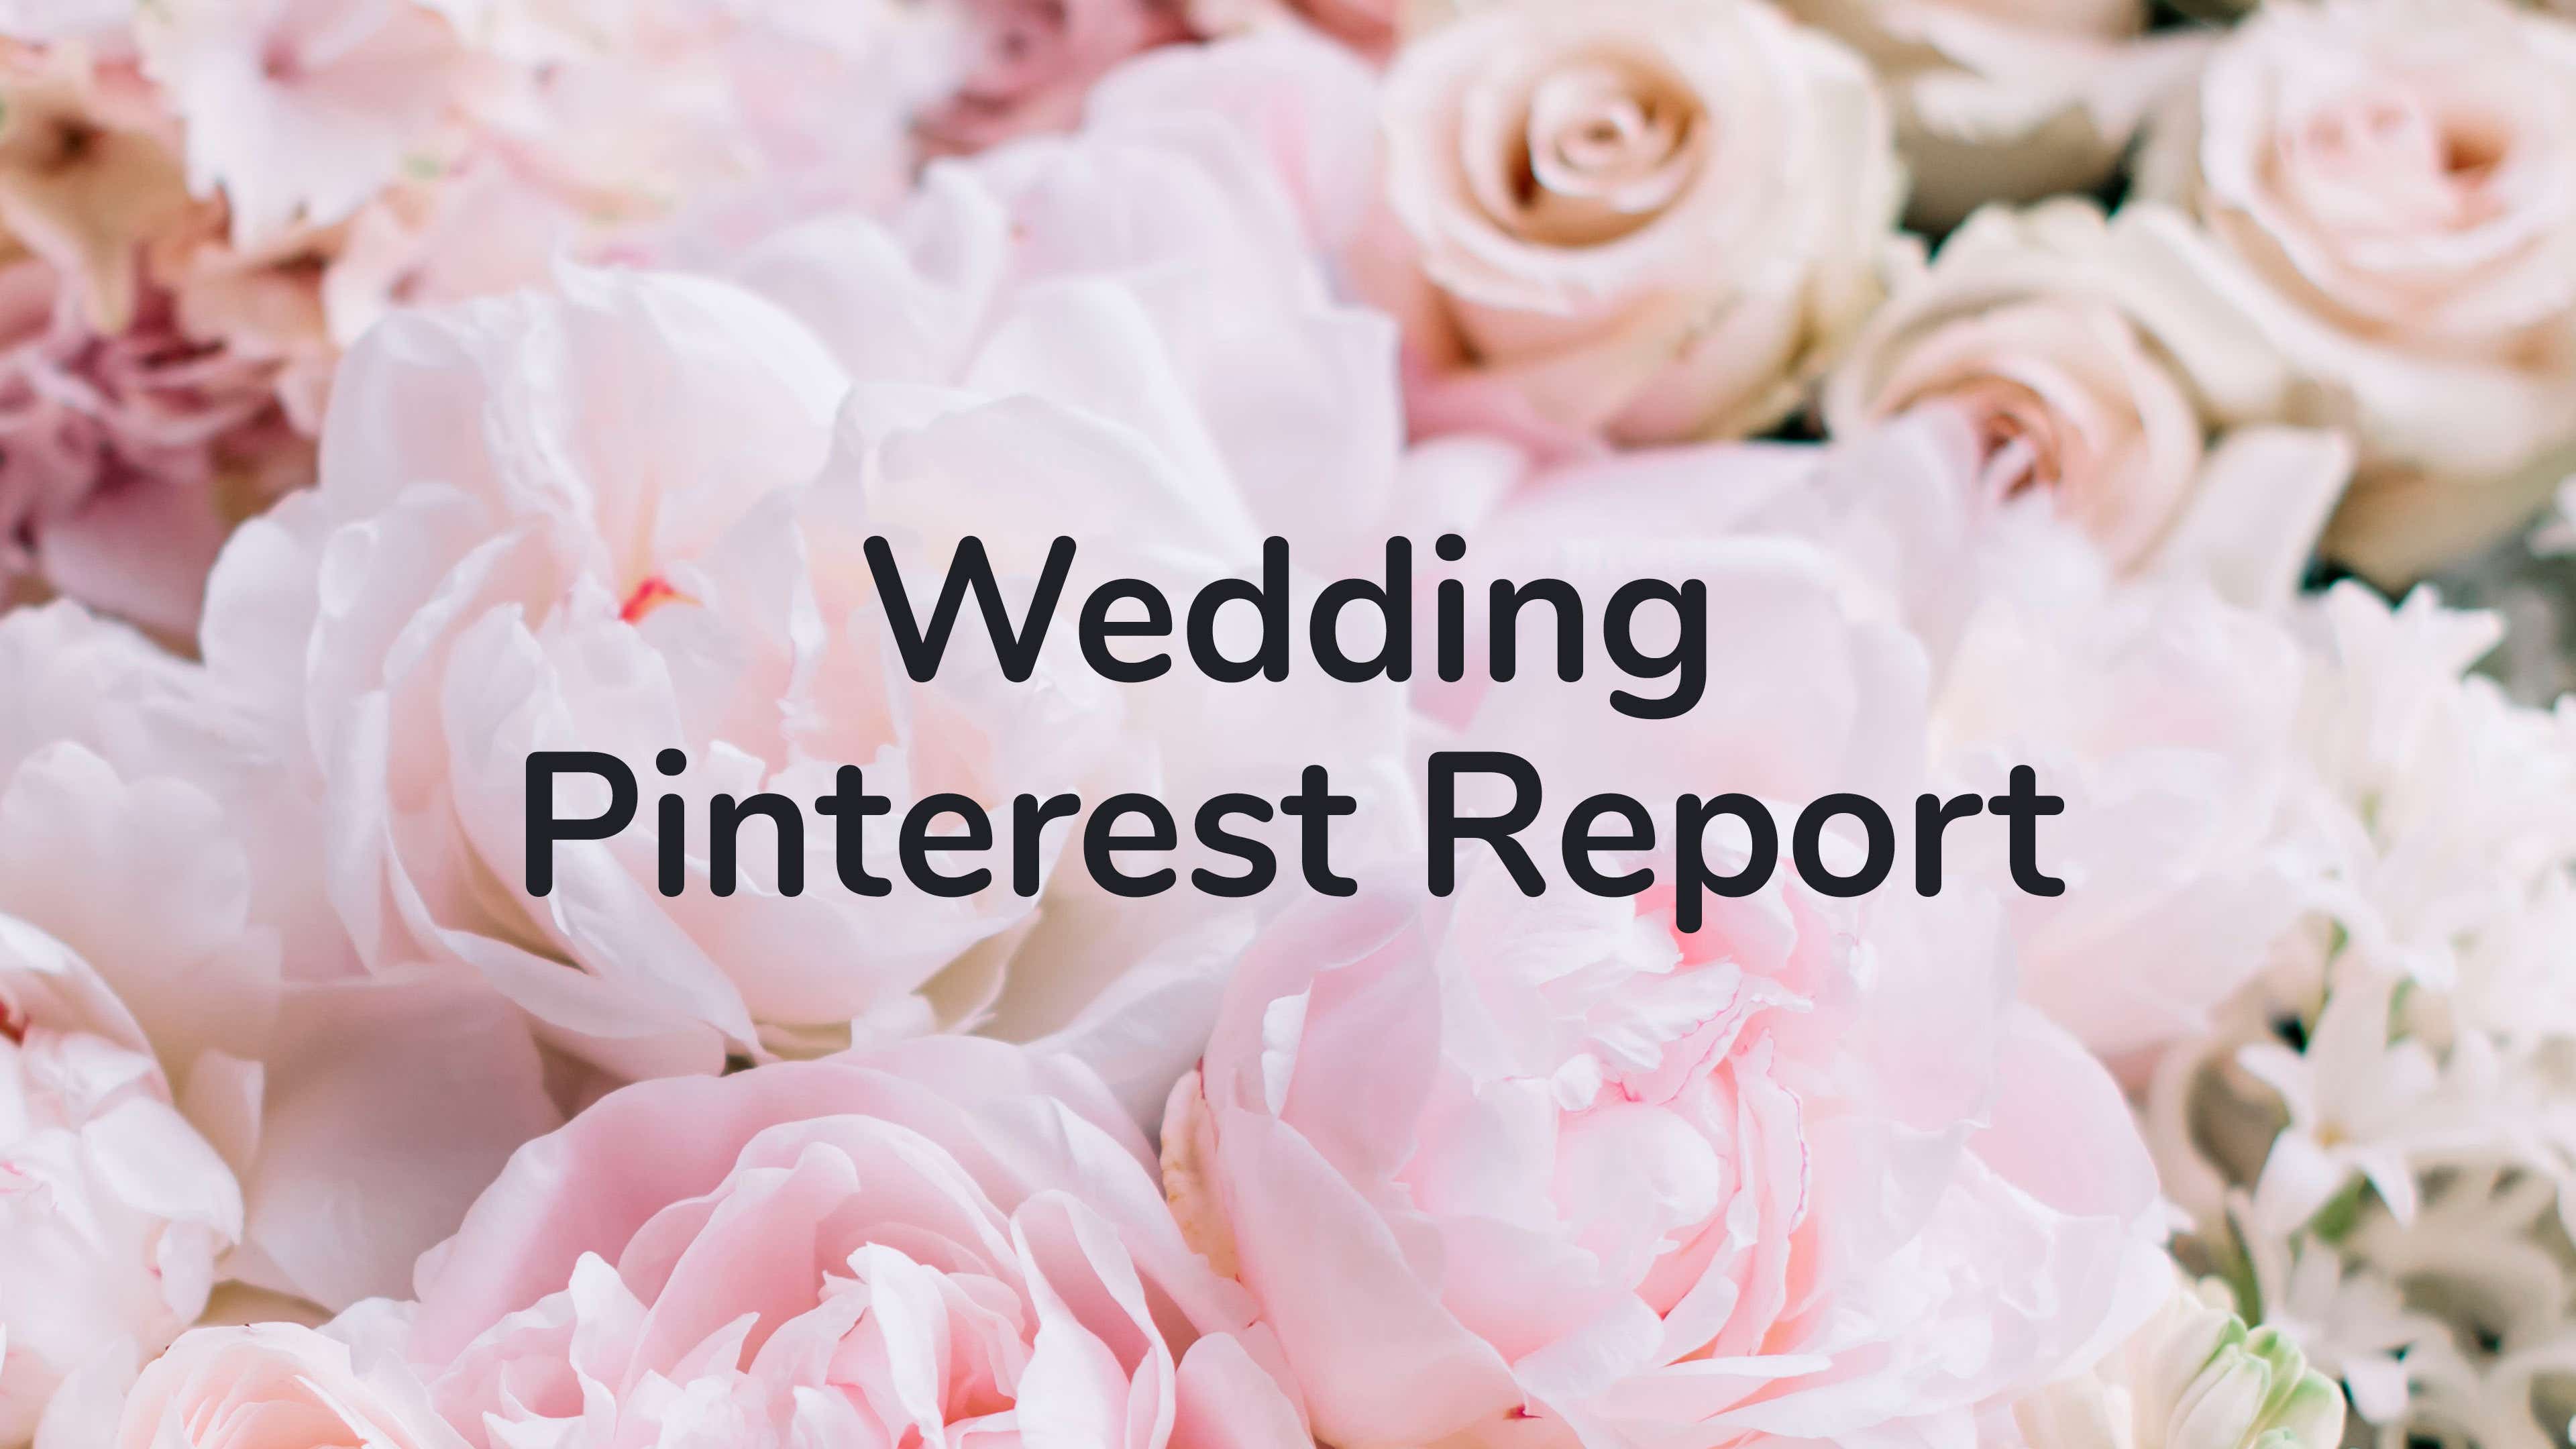 Image for header of Wedding Pinterest Report